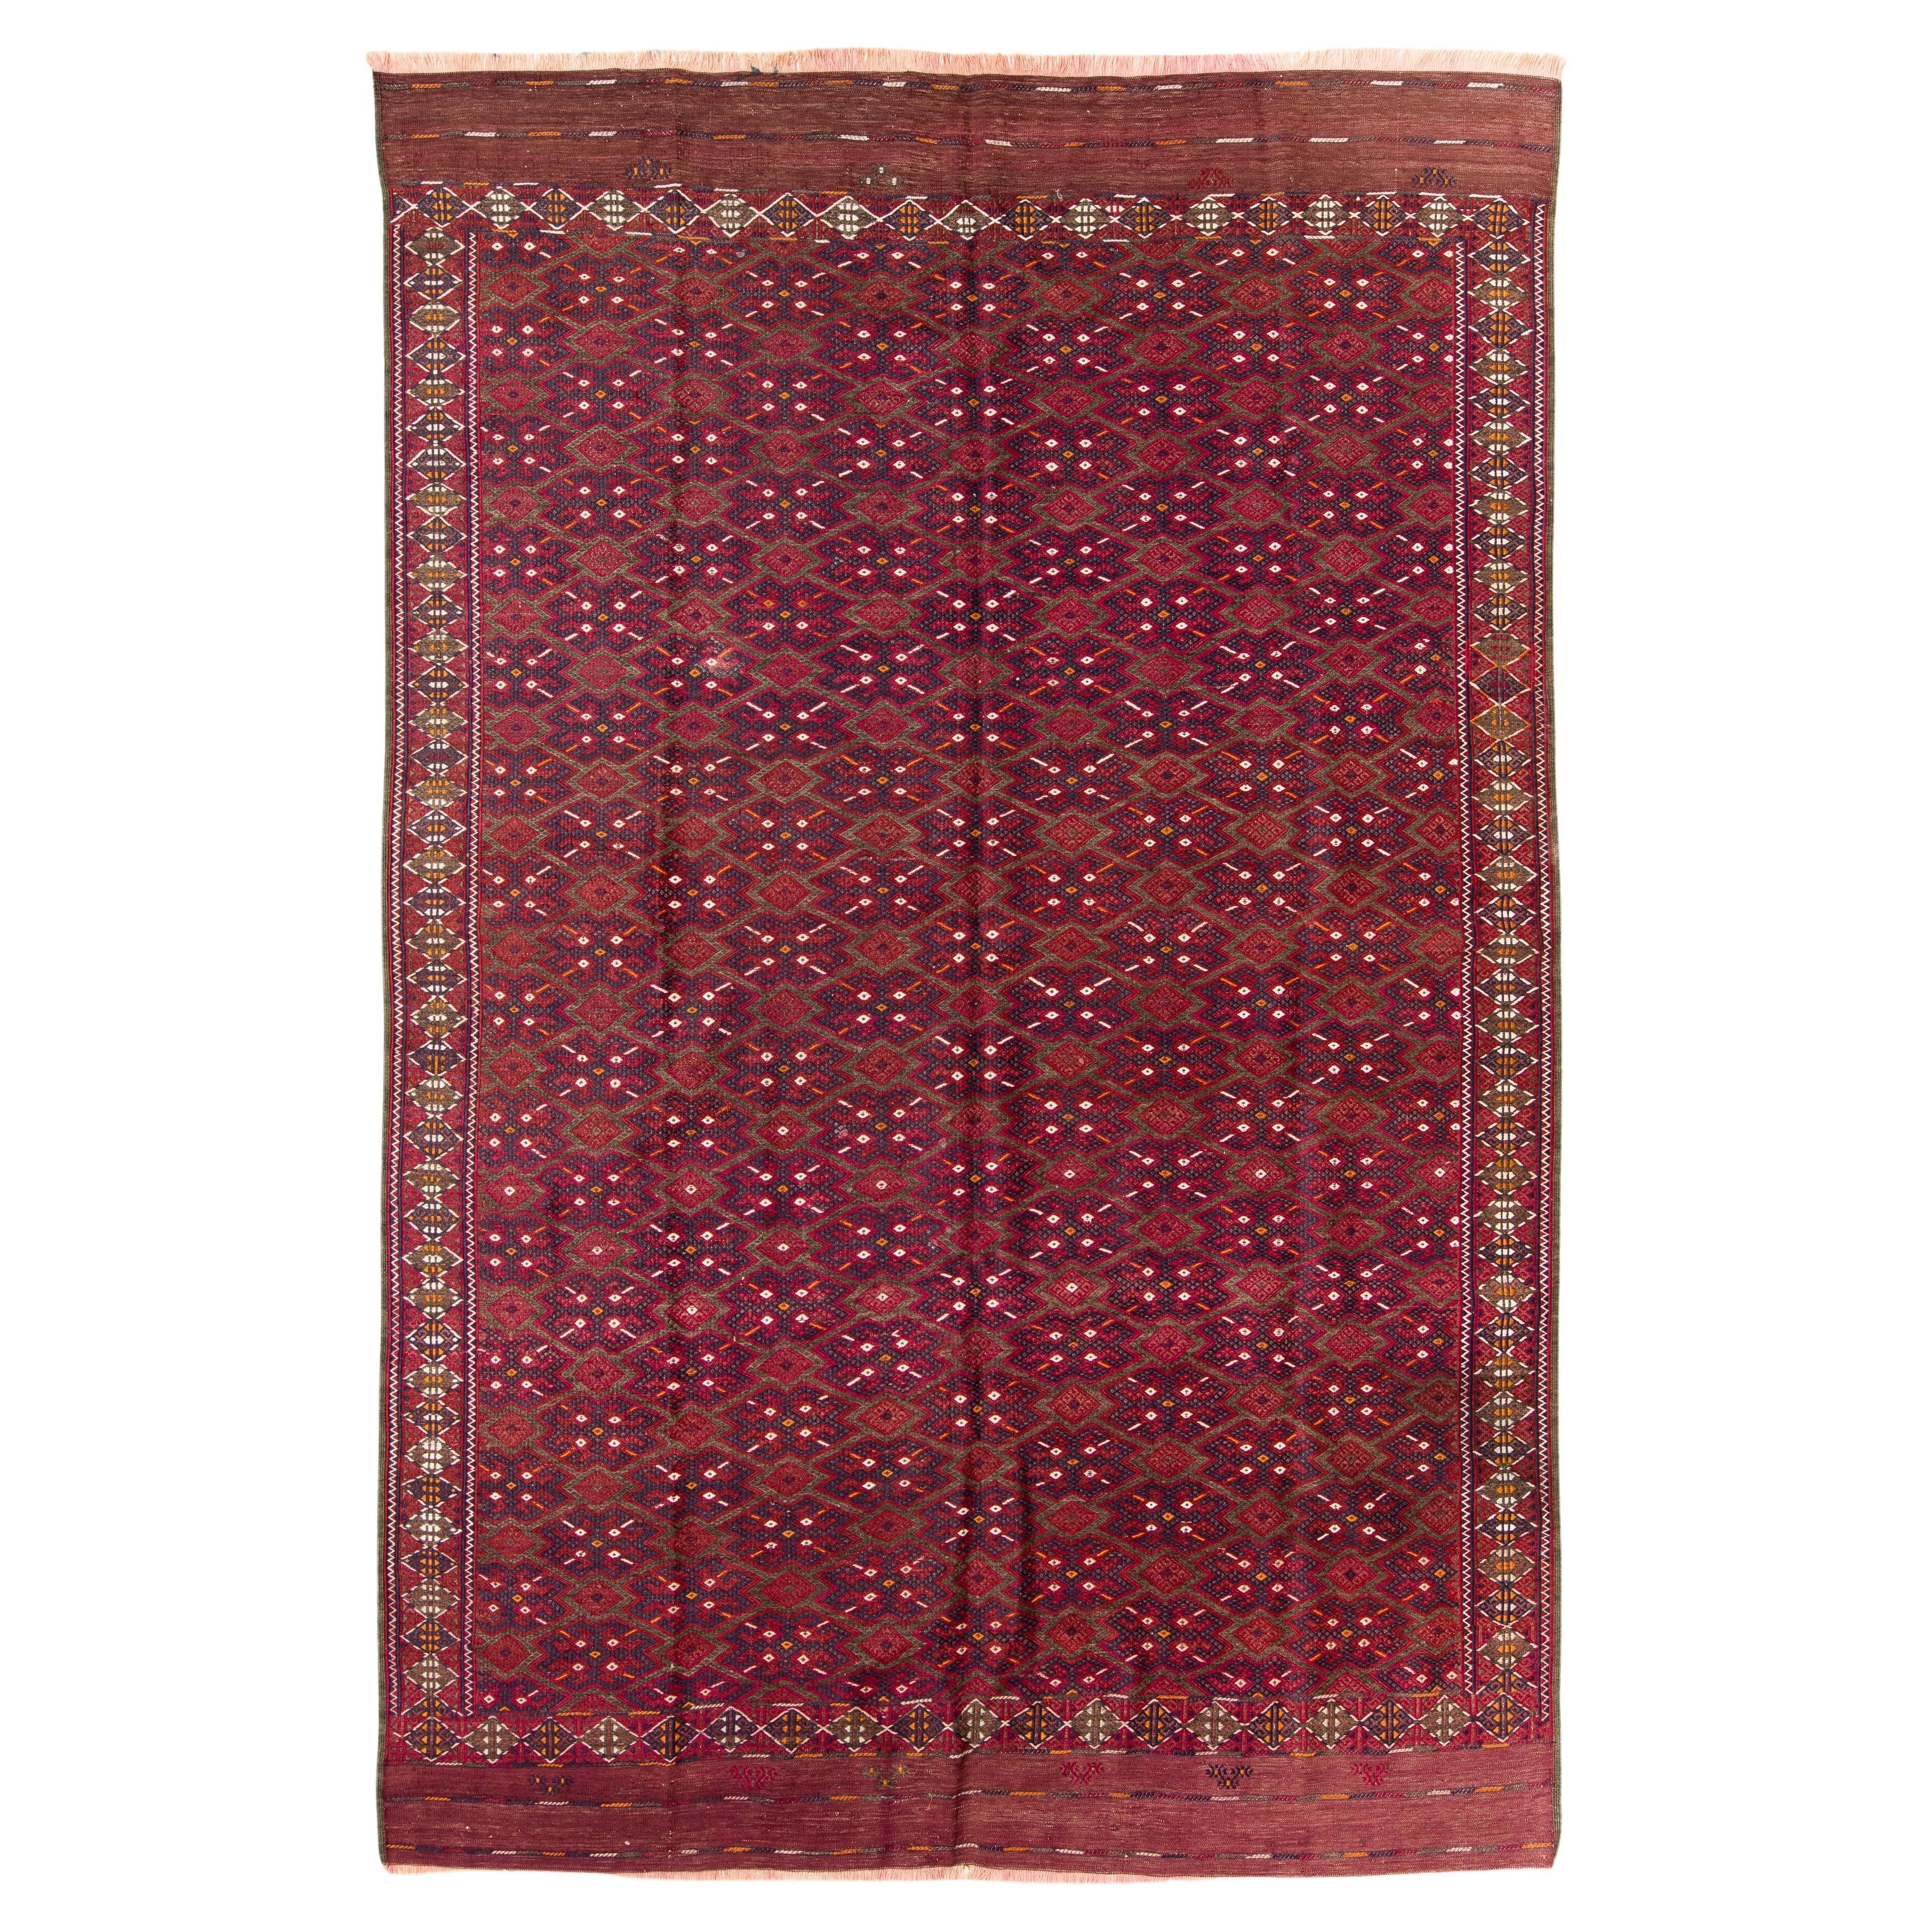 Collection de tapis Ararat, tapis turkoman ancien Yomut Turkoman d'Asie centrale